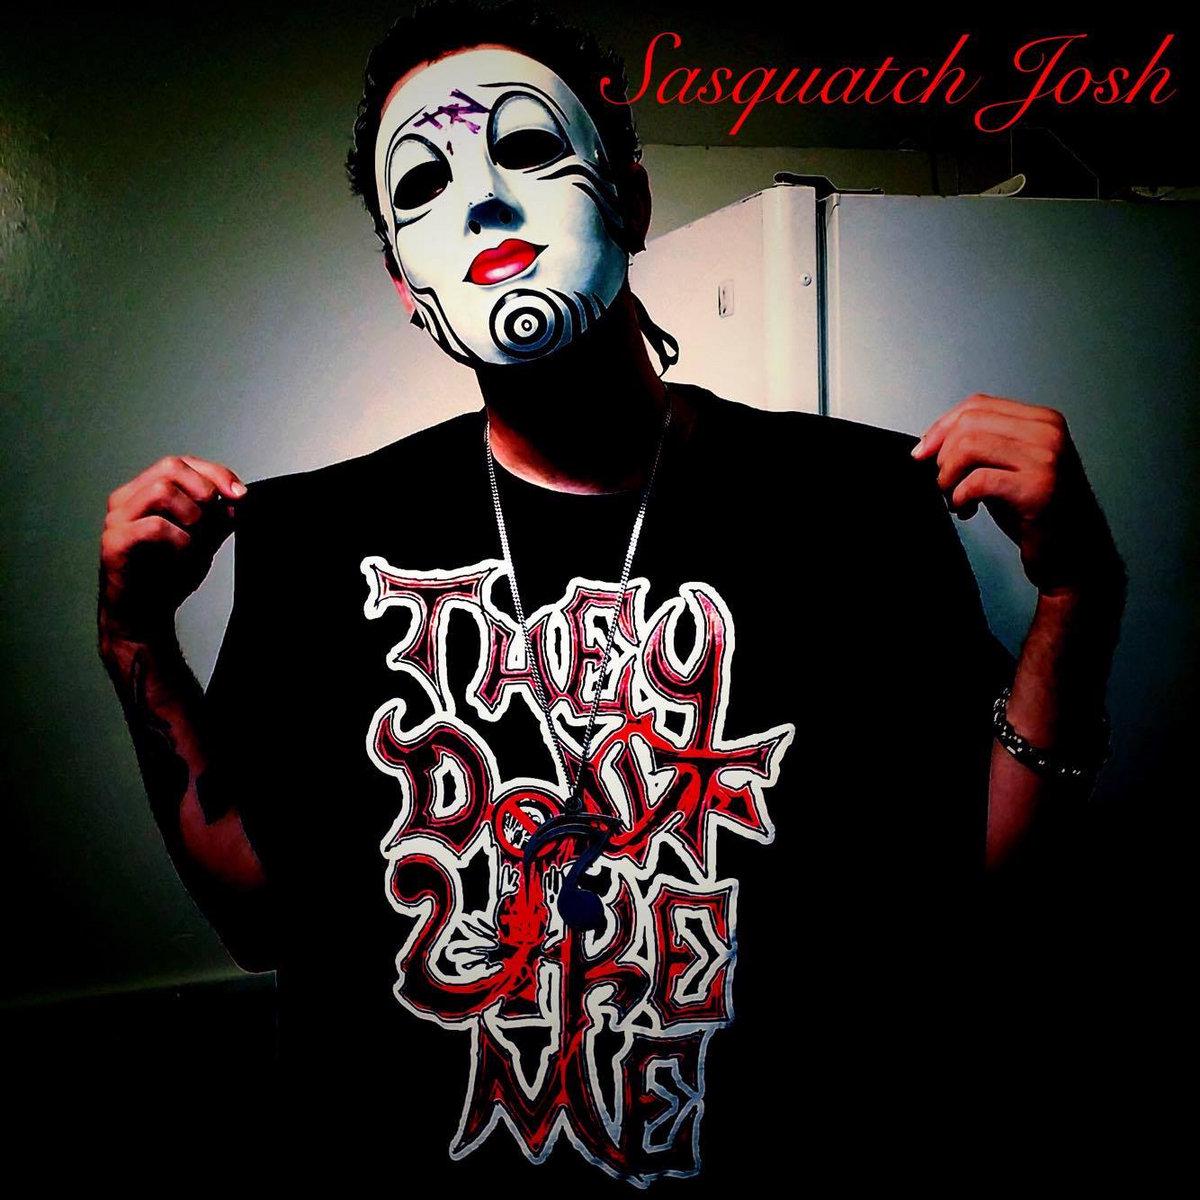 Sasquatch Josh